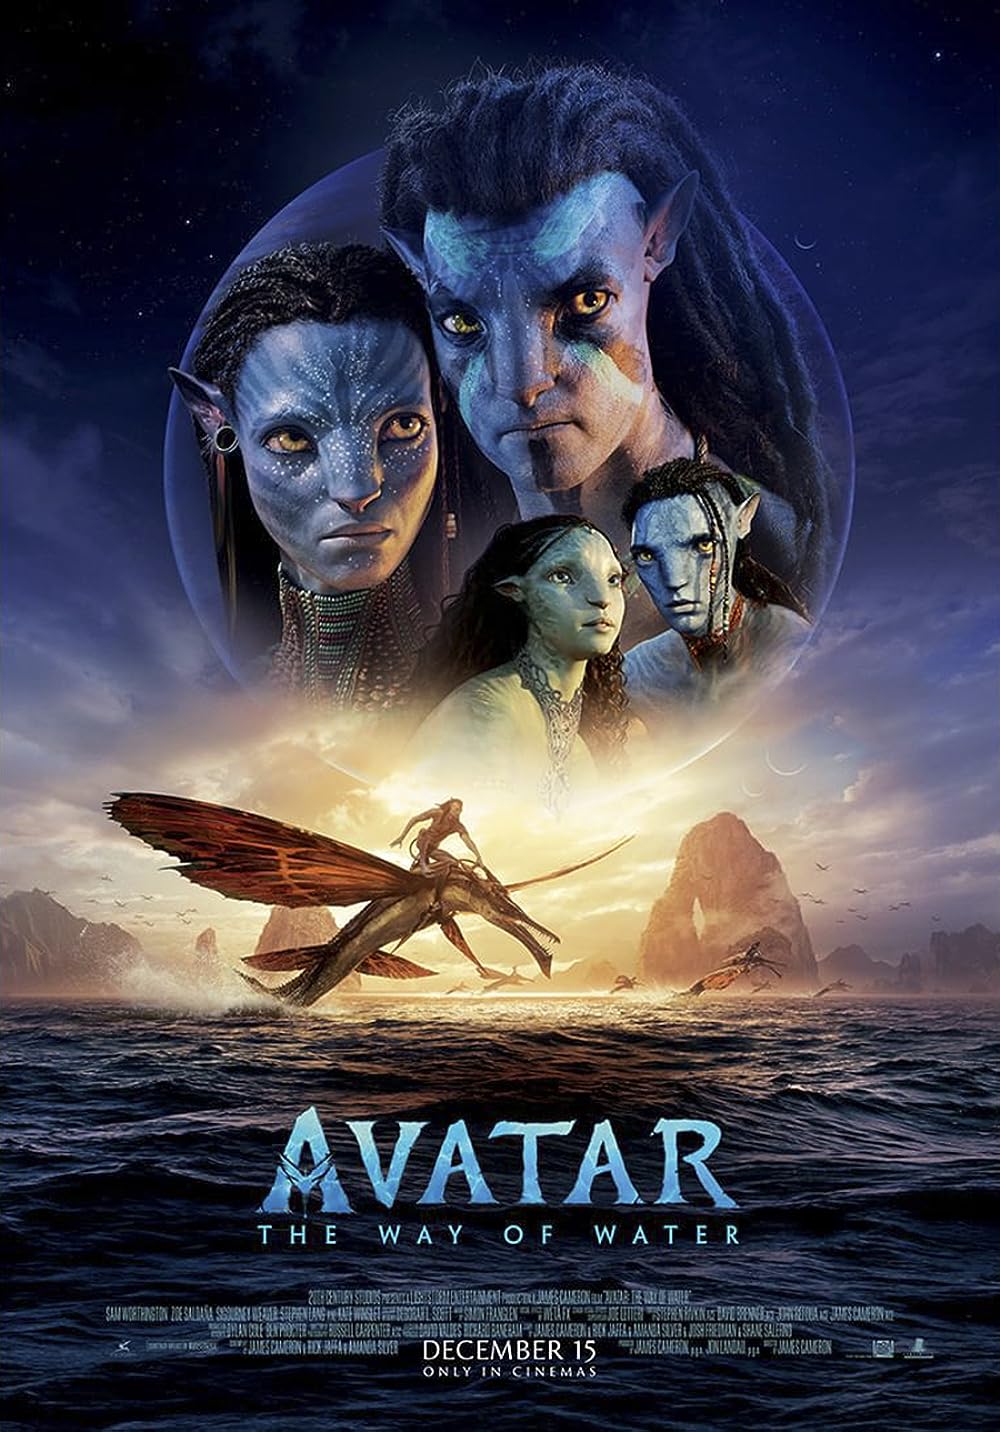 Stiahni si 3D Filmy Avatar: Cesta vody / Avatar: The Way of Water 3D (CZ)(2022) = CSFD 80%